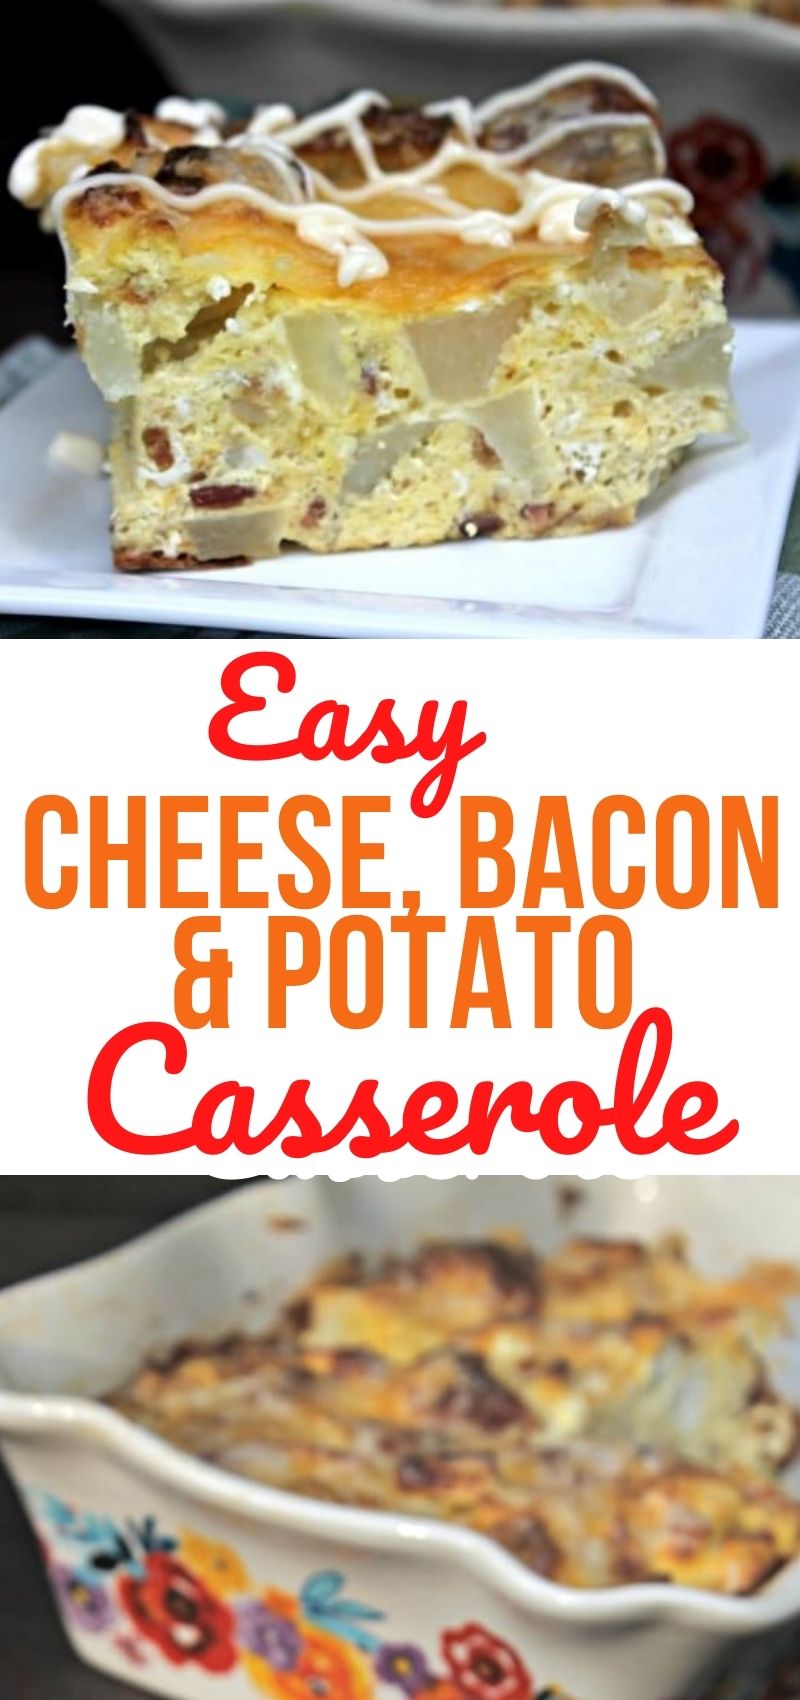 Cheese, Bacon and Potato Breakfast Casserole Recipe - Thrifty Jinxy